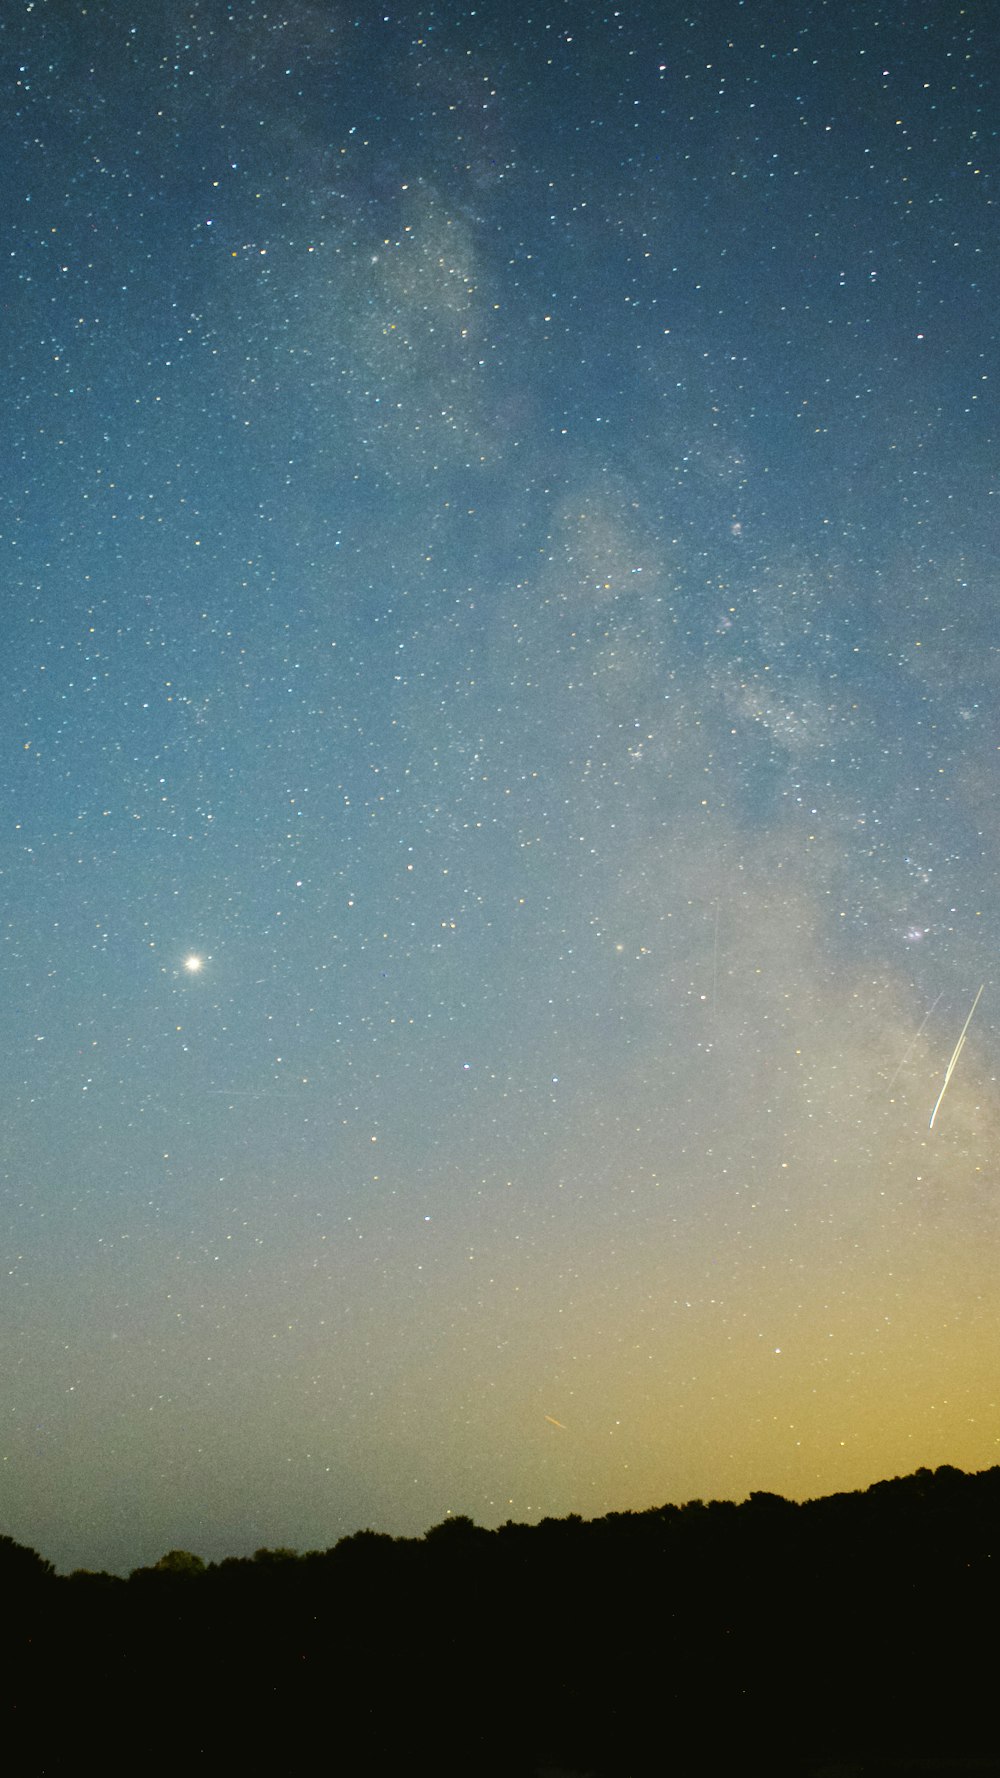 starry night sky over the city photo – Free Nature Image on Unsplash